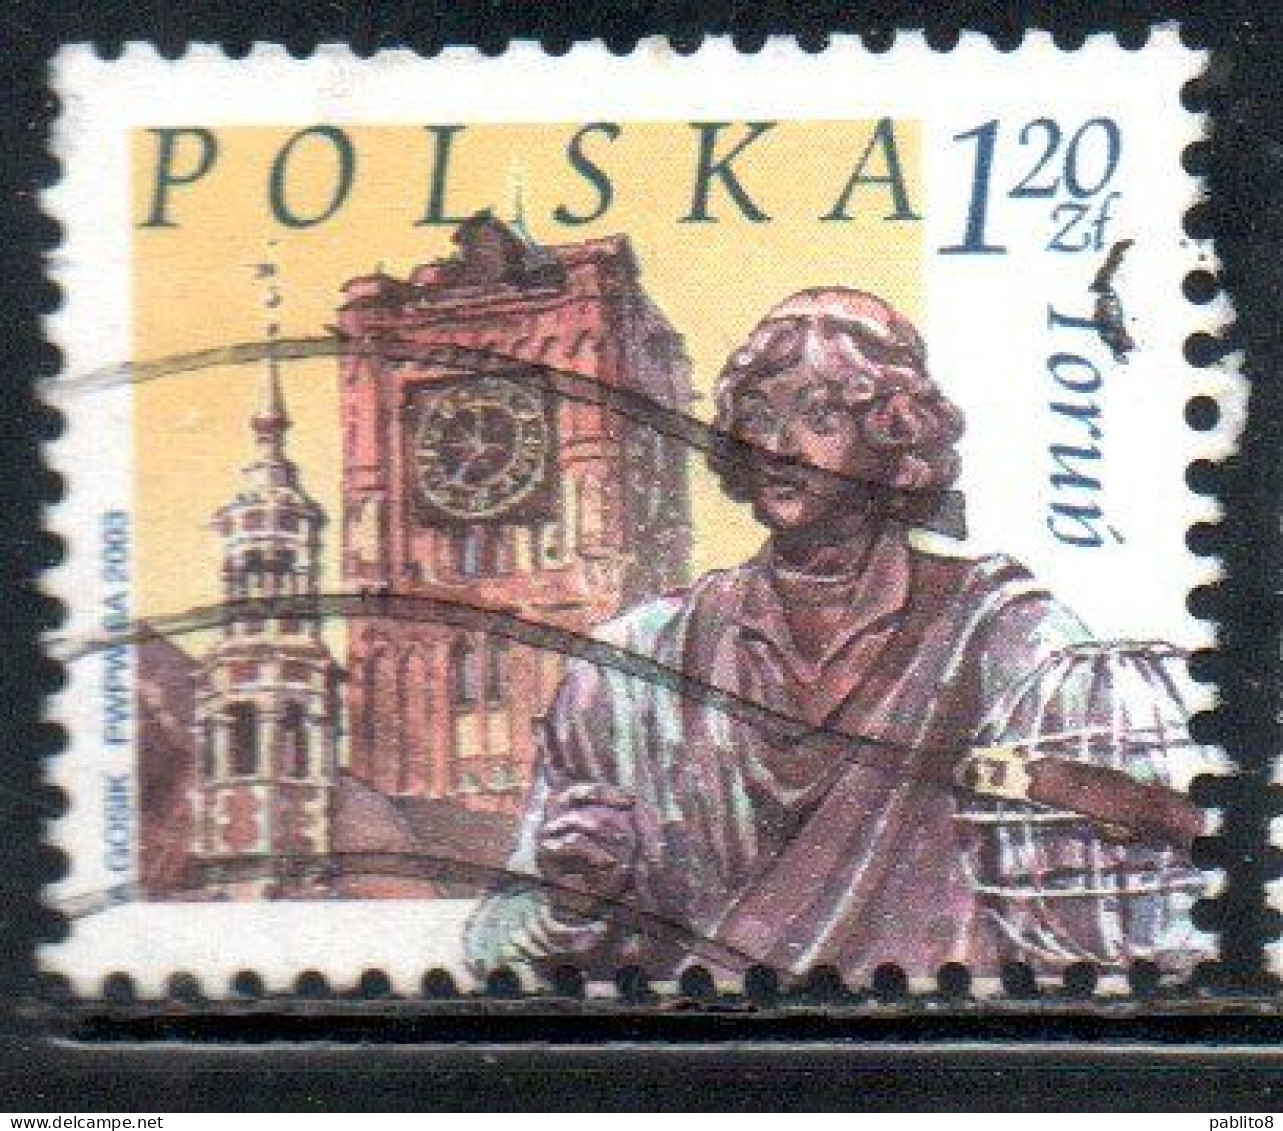 POLONIA POLAND POLSKA 2003 TOWER OF OLD CITY HALL STATUE OF NICOLAUS COPERNICUS TORUN 1.20z USED USATO OBLITERE' - Usados